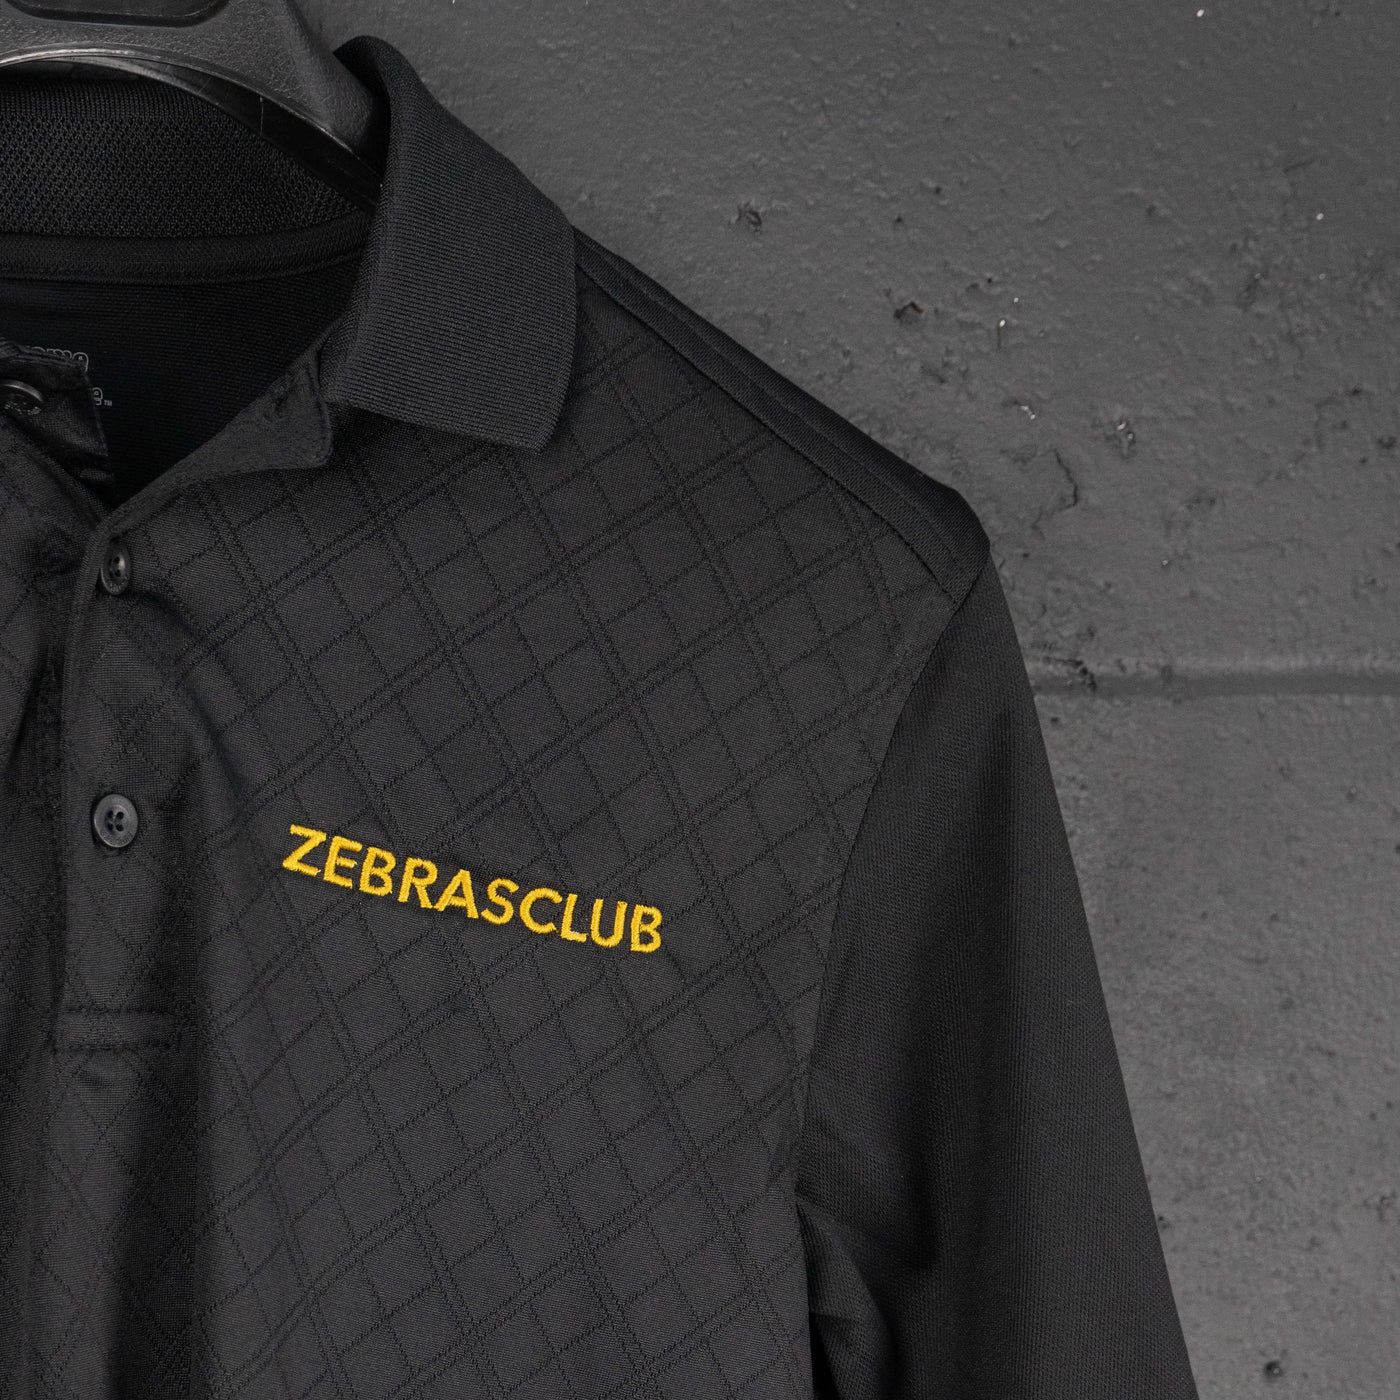 Zebrasclub hockey referee polo shirt embroidery